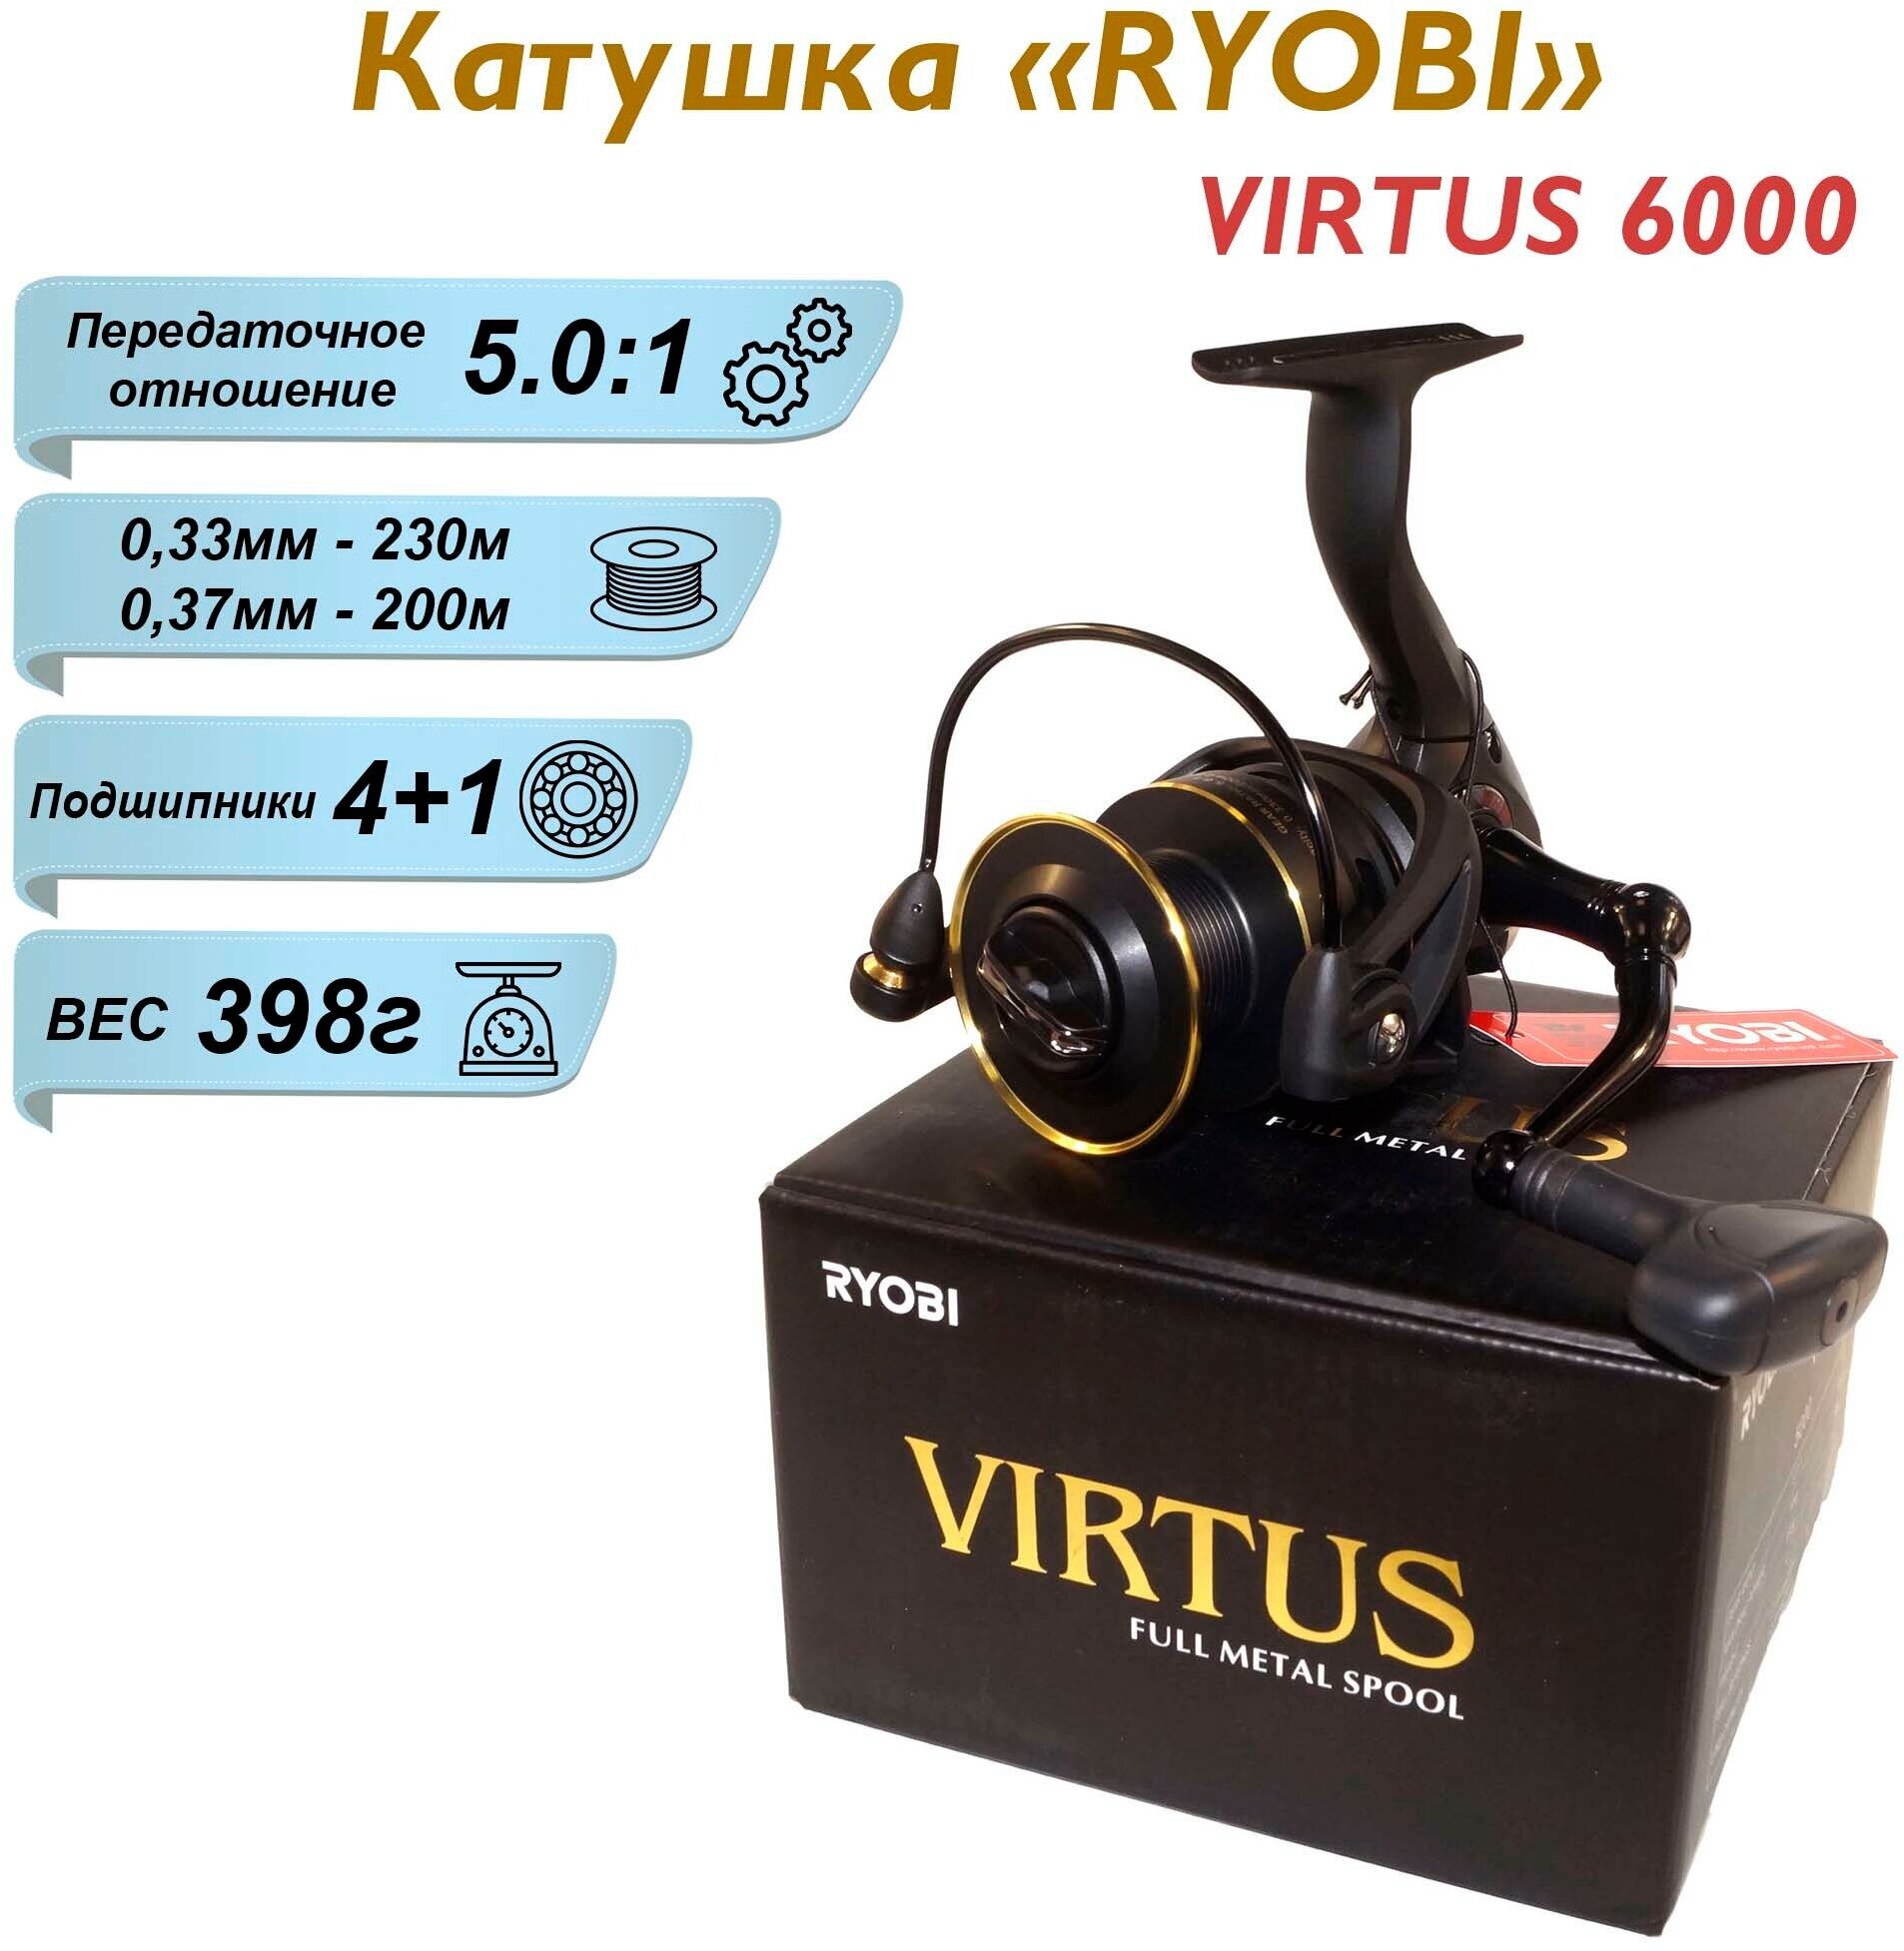 Катушка безынерционная RYOBI Virtus 2000